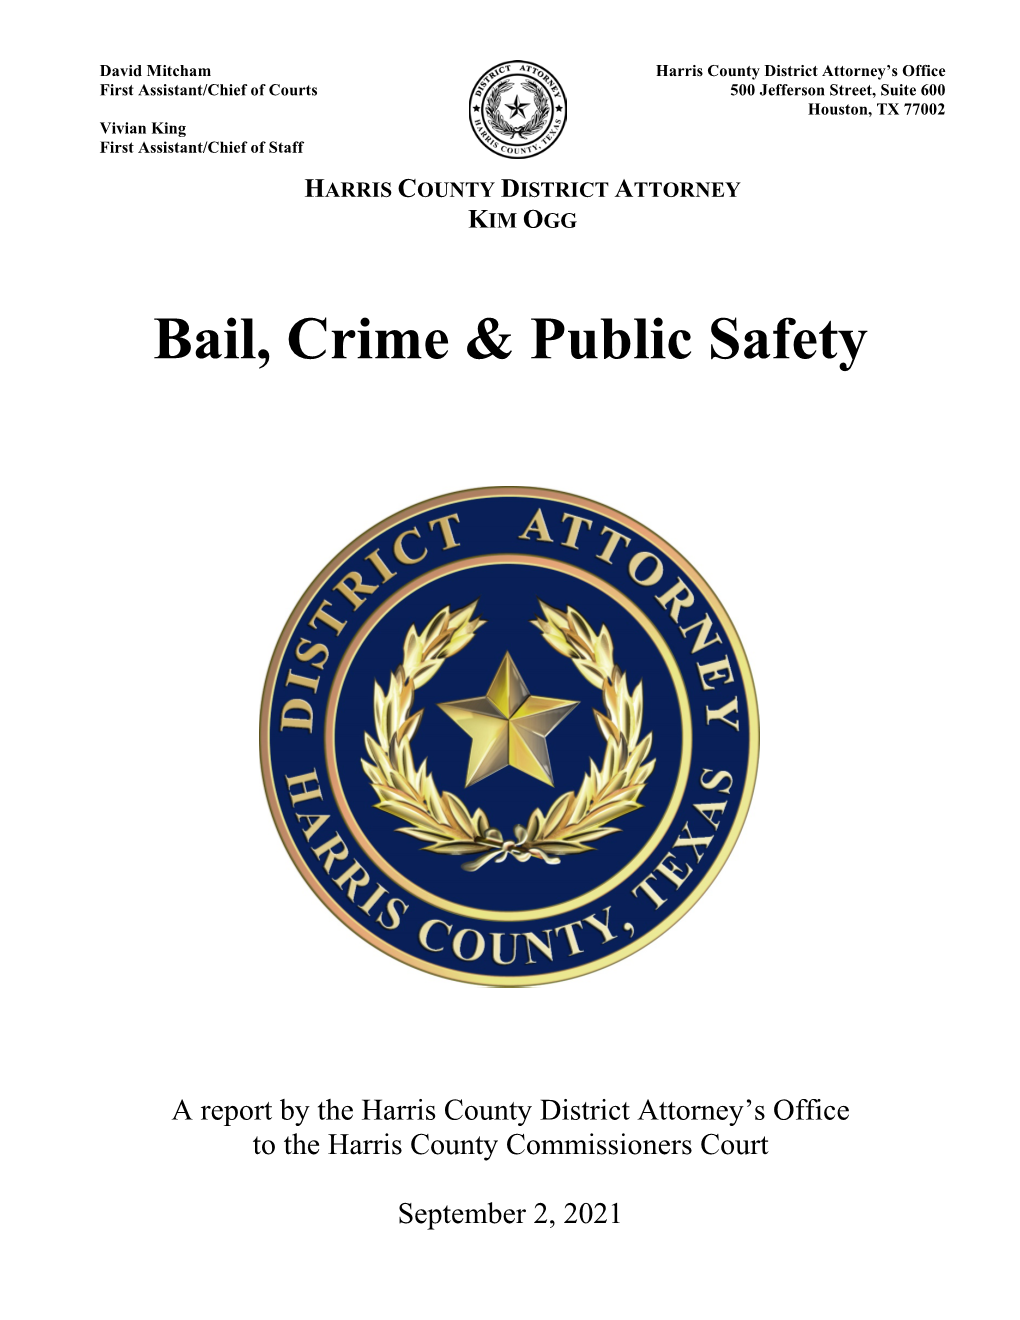 Bail, Crime & Public Safety